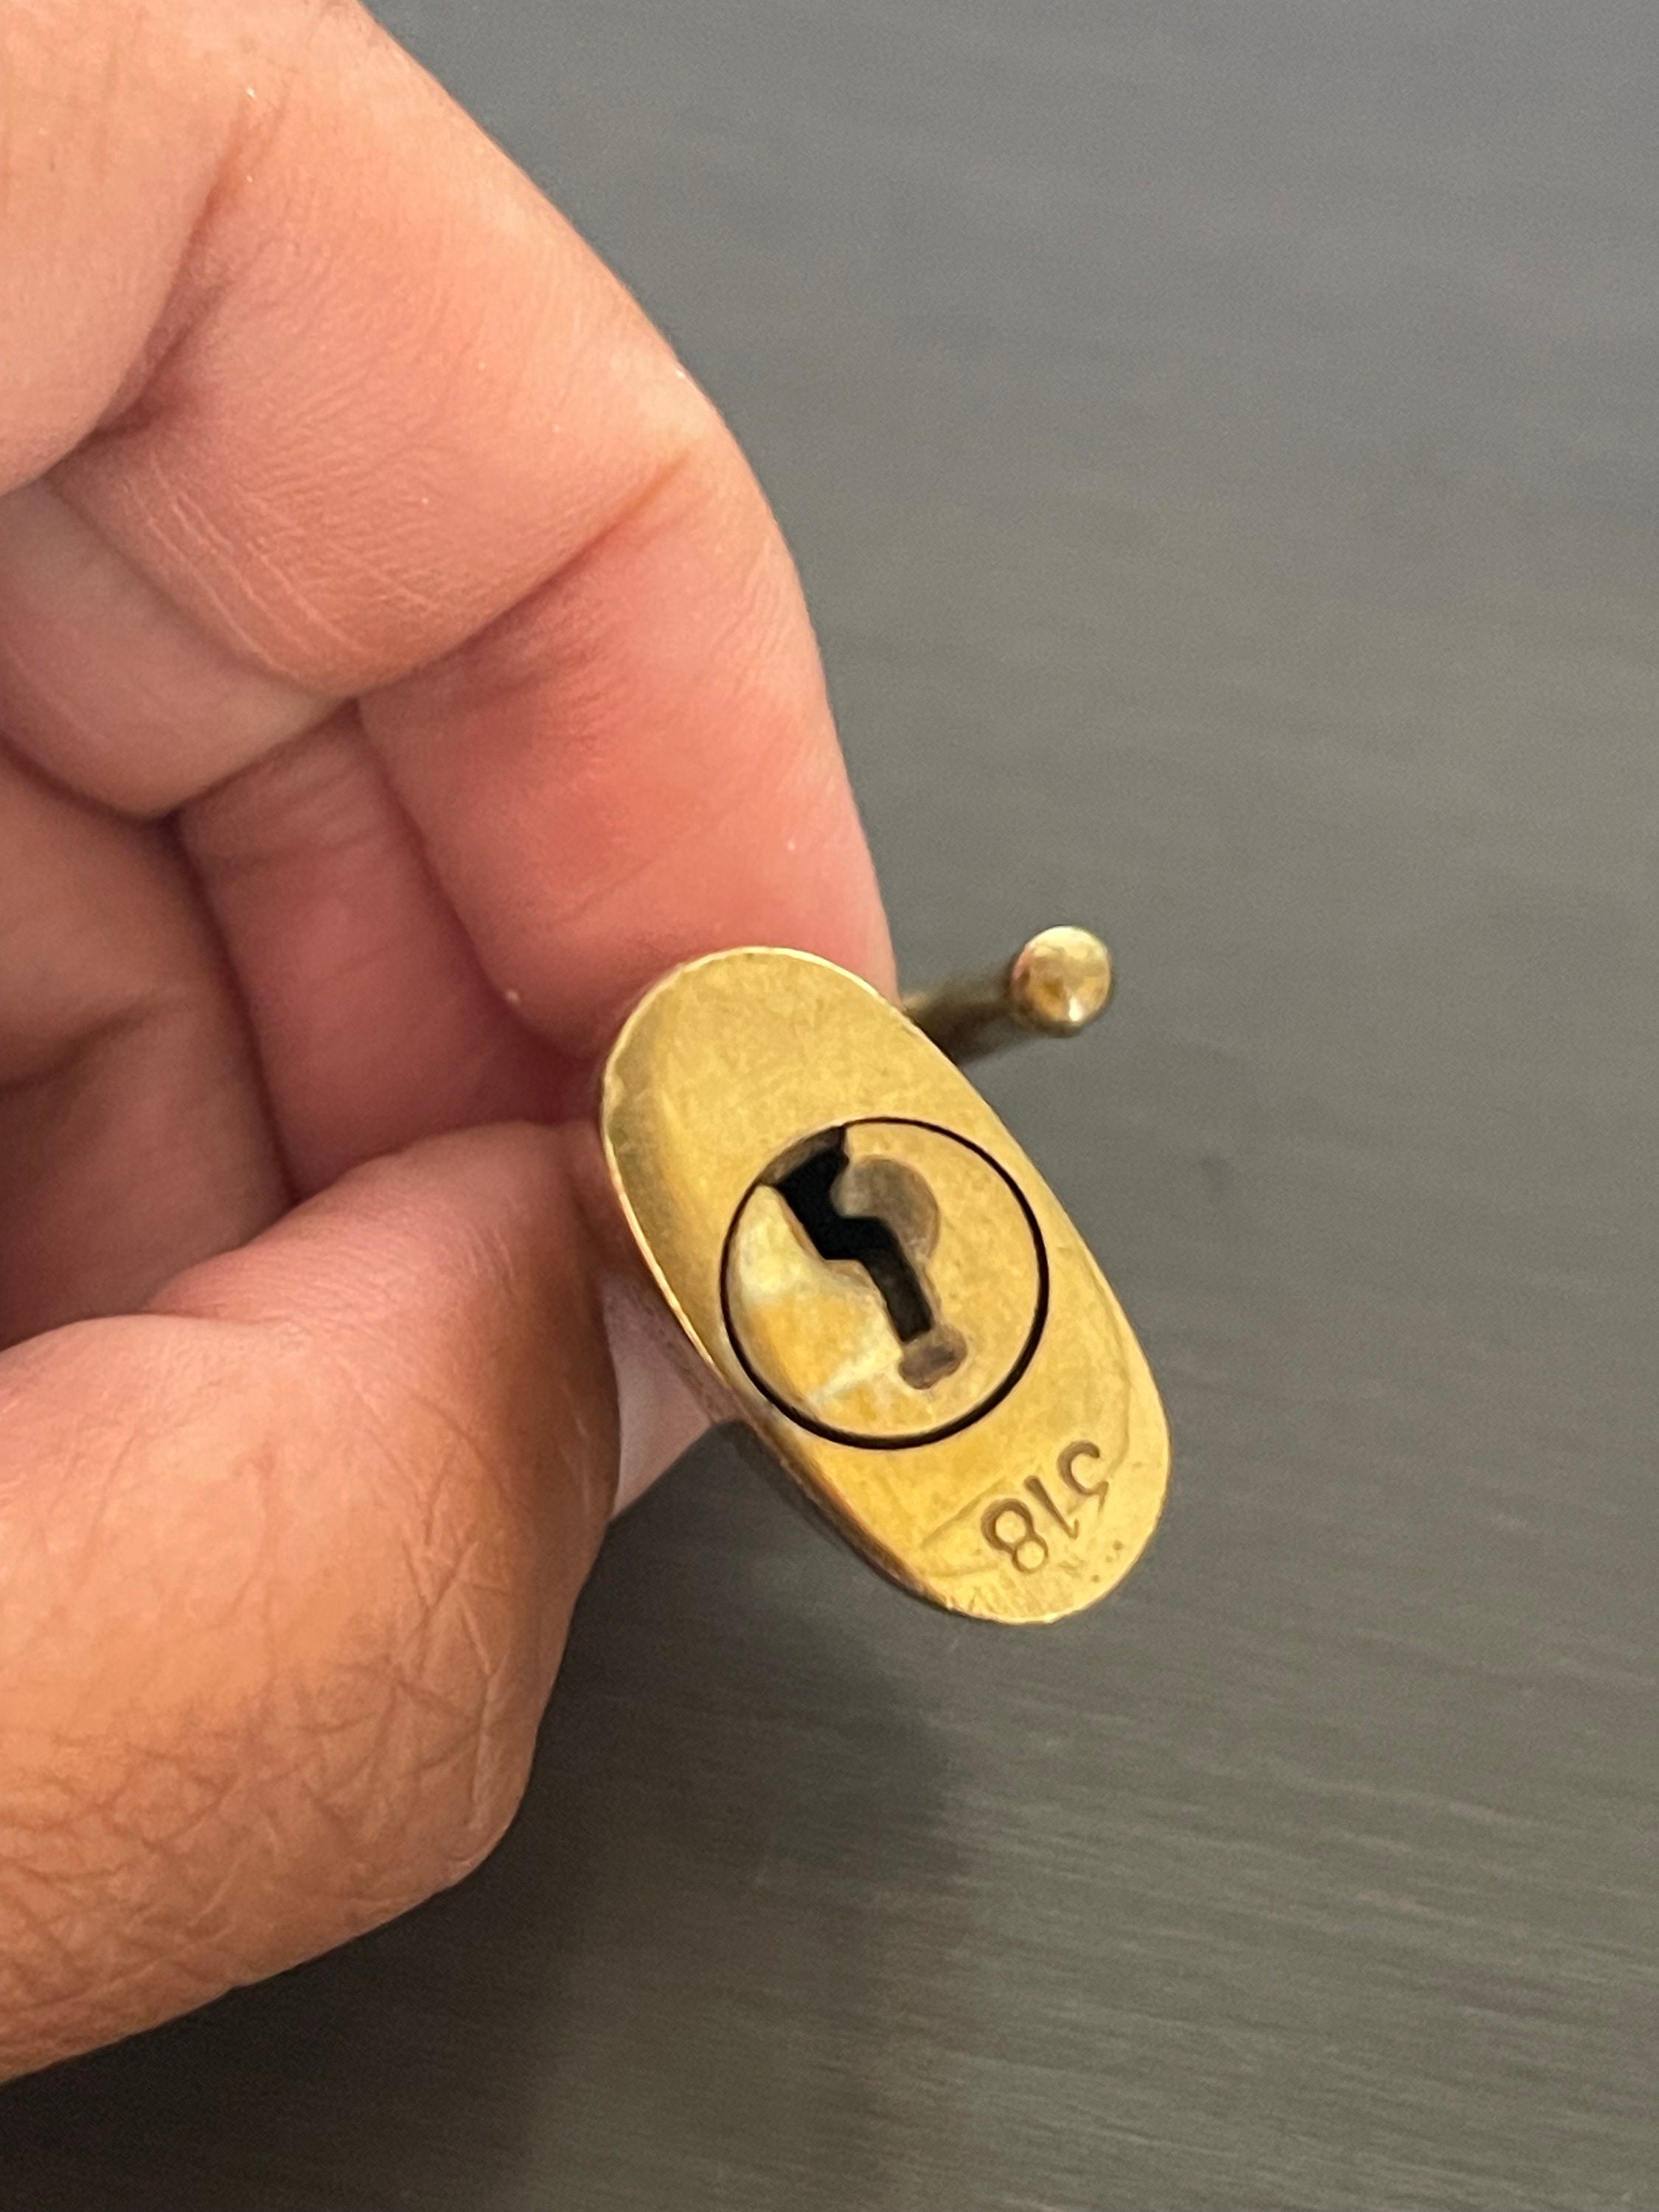 Louis Vuitton Gold Brass Lock And Key Set #318